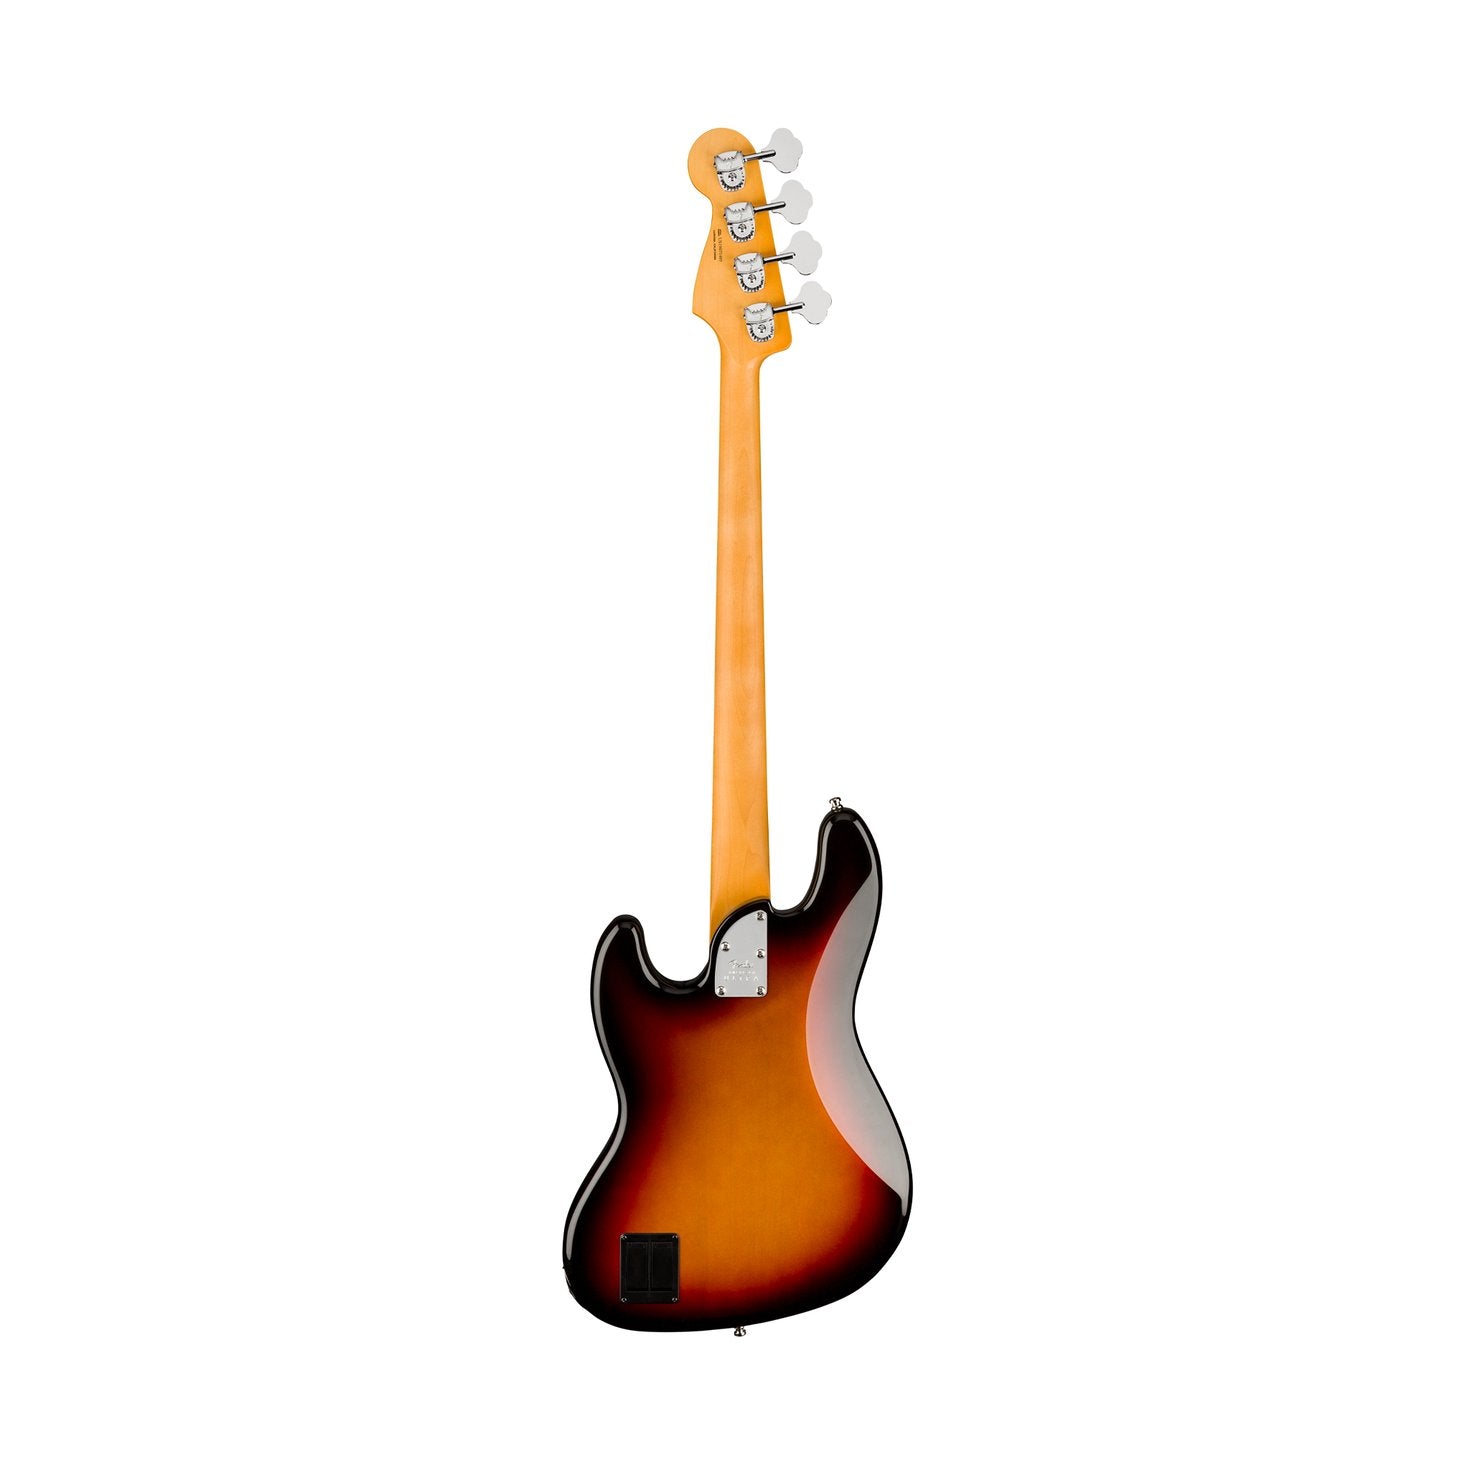 Fender American Ultra Jazz Bass Guitar, RW FB, Ultraburst, FENDER, BASS GUITAR, fender-bass-guitar-f03-019-9020-712, ZOSO MUSIC SDN BHD